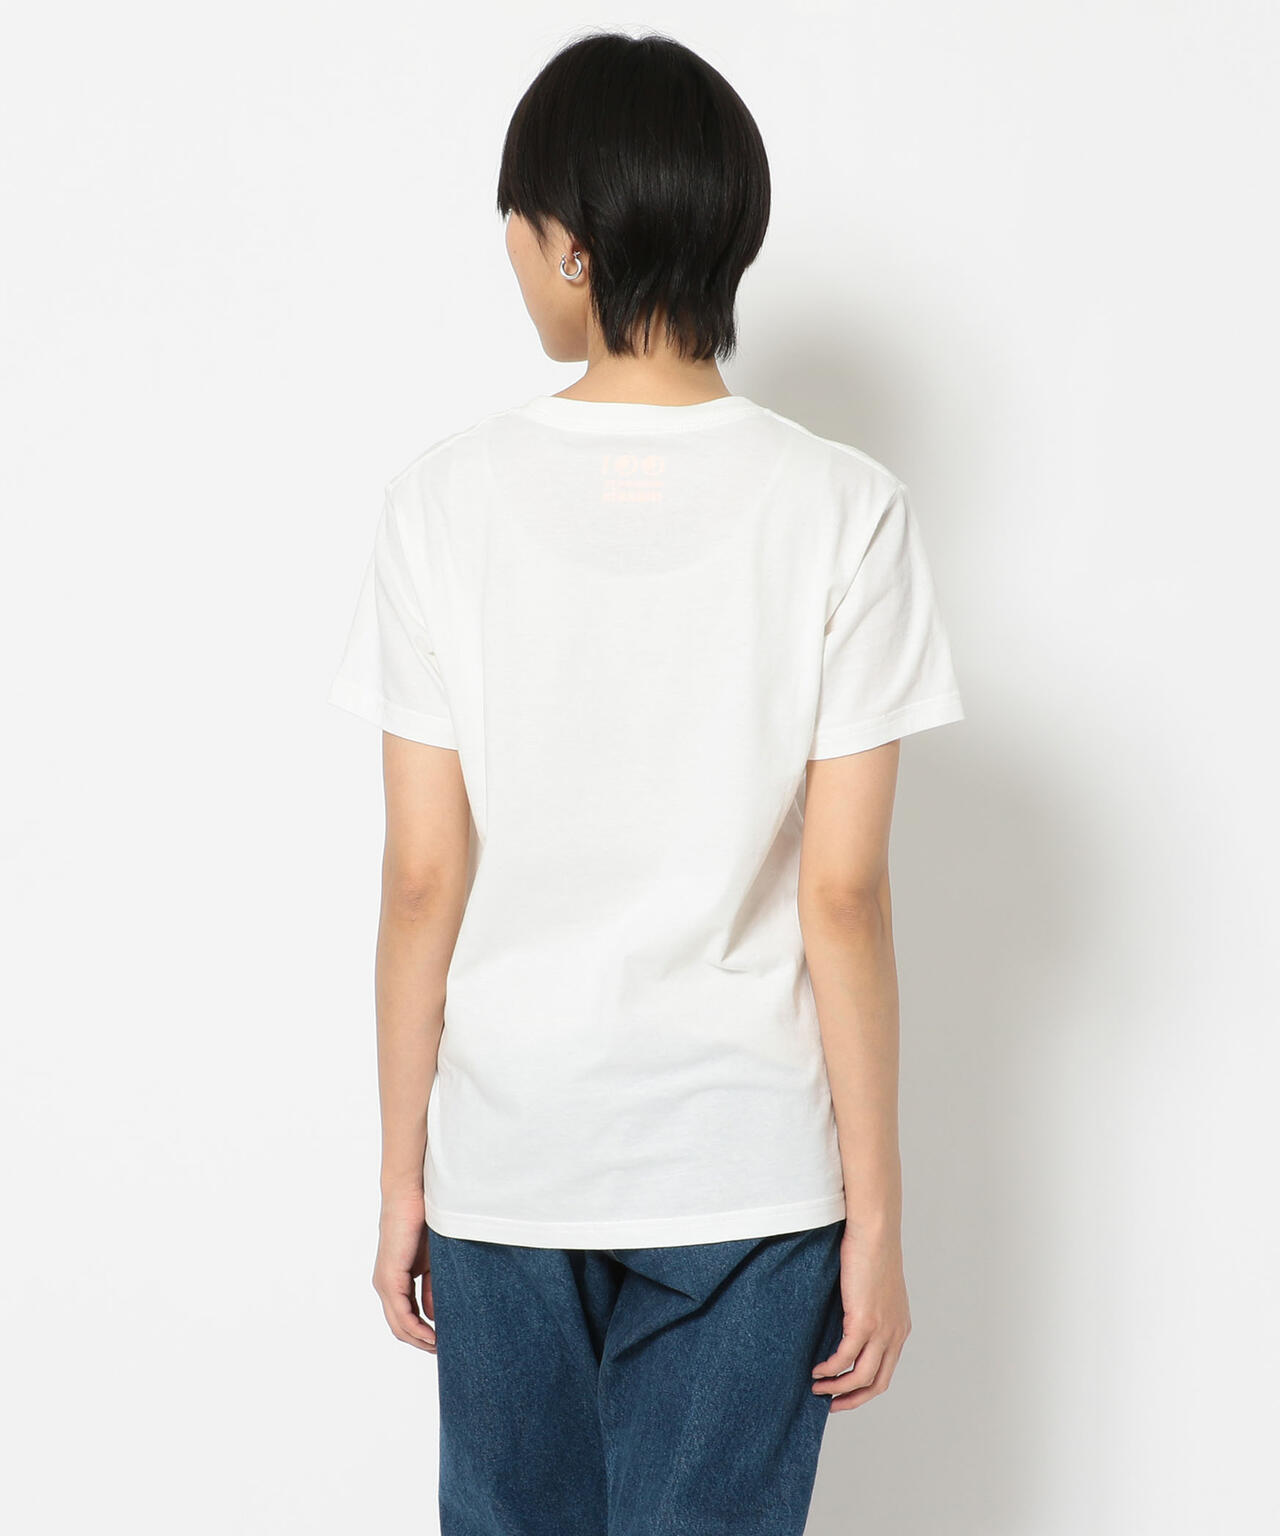 001designed by maxsix（ゼロゼロワン）ワンポイント刺繍Tシャツ 